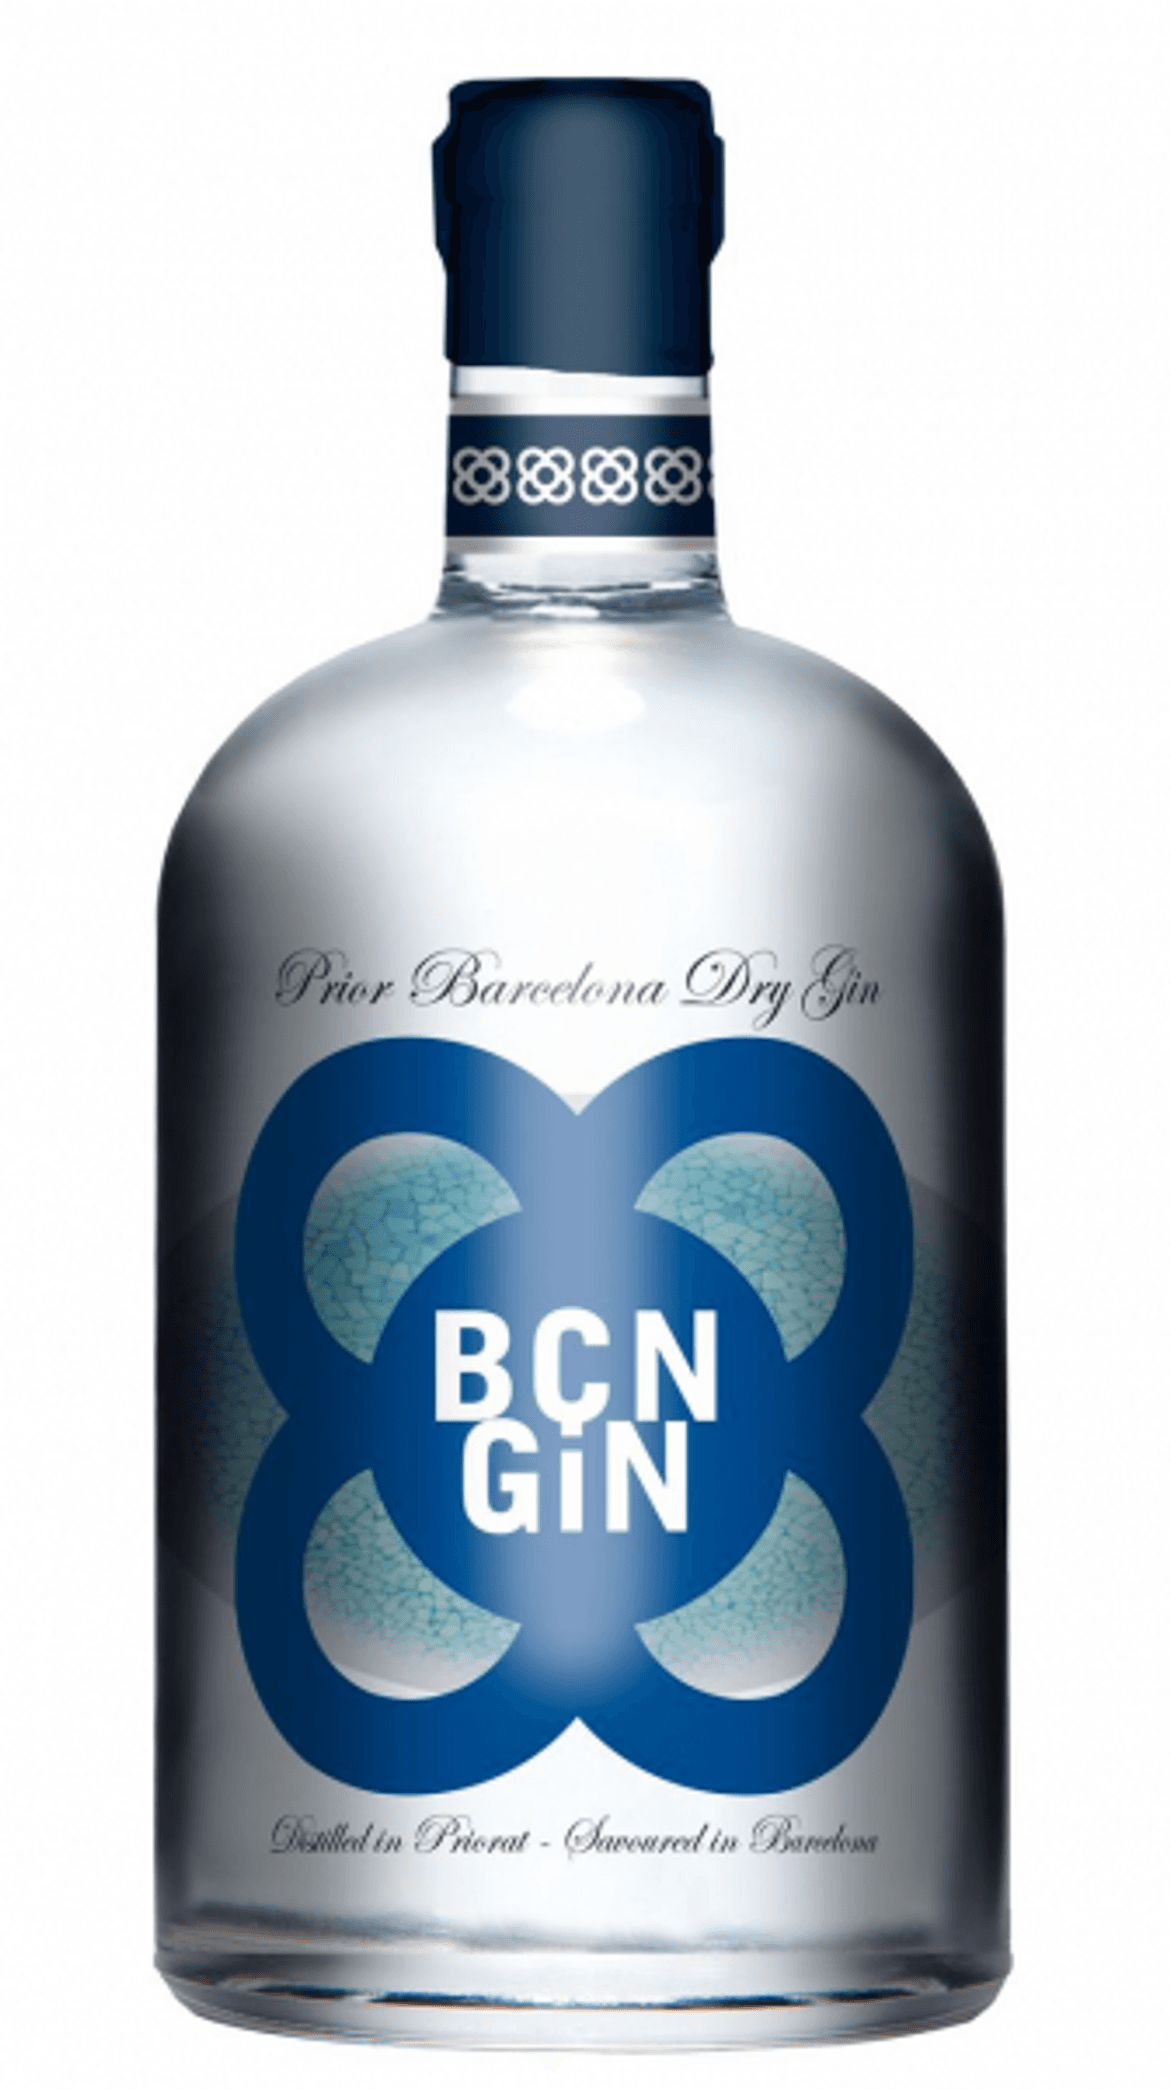 BCN gin 40%